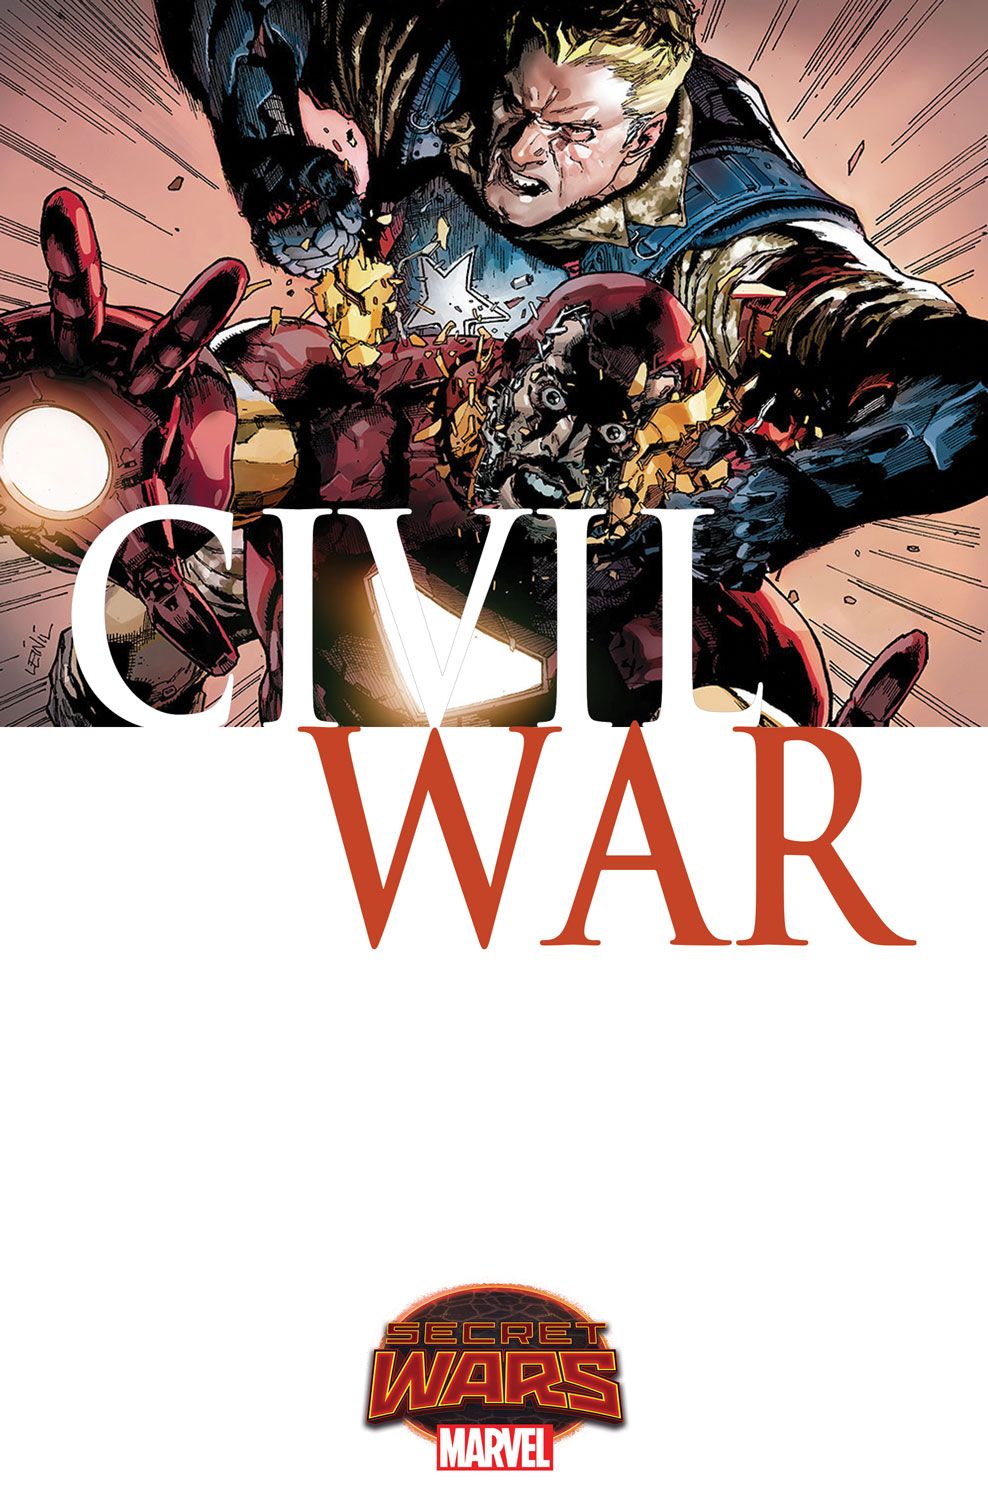 Civil War #1 Comic